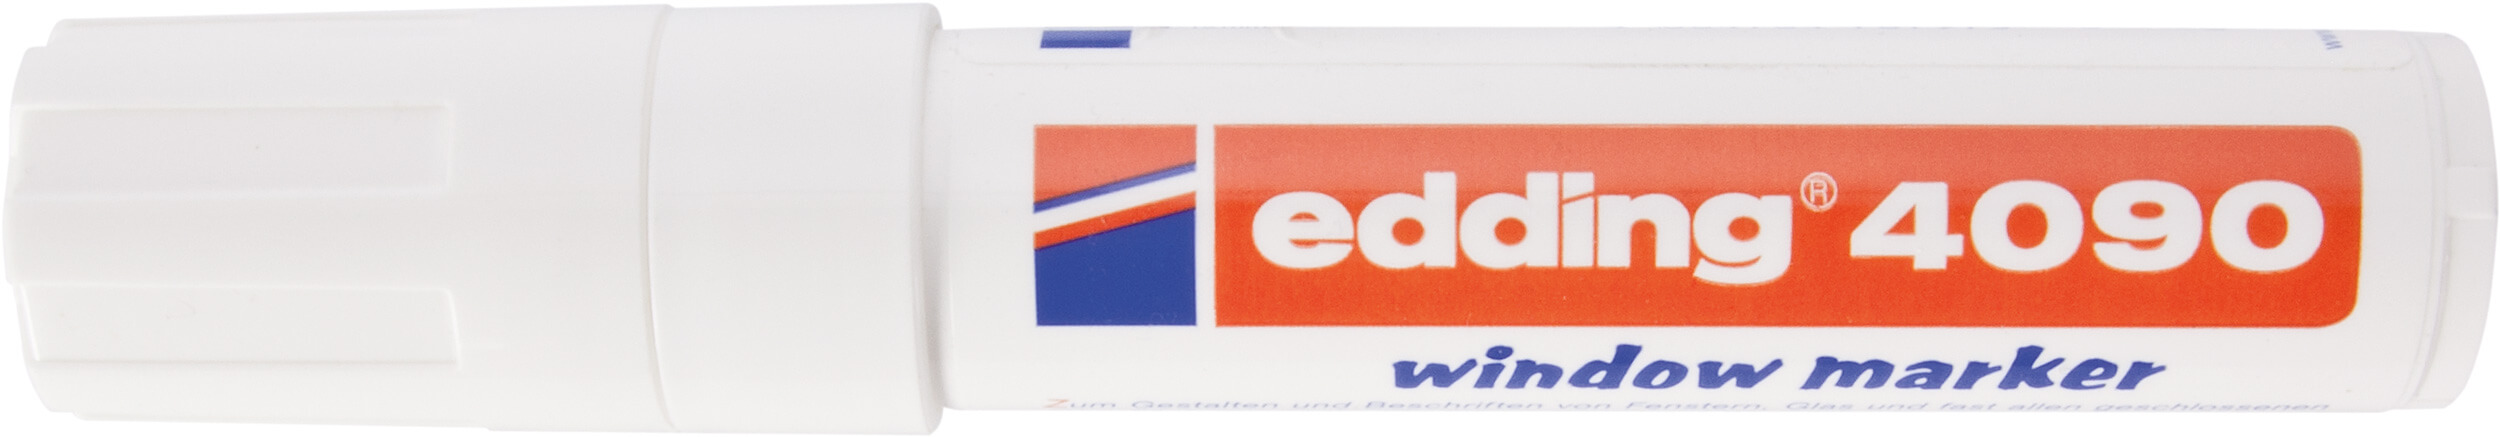 Edding 4090 Window Marker, liquid crayon - white